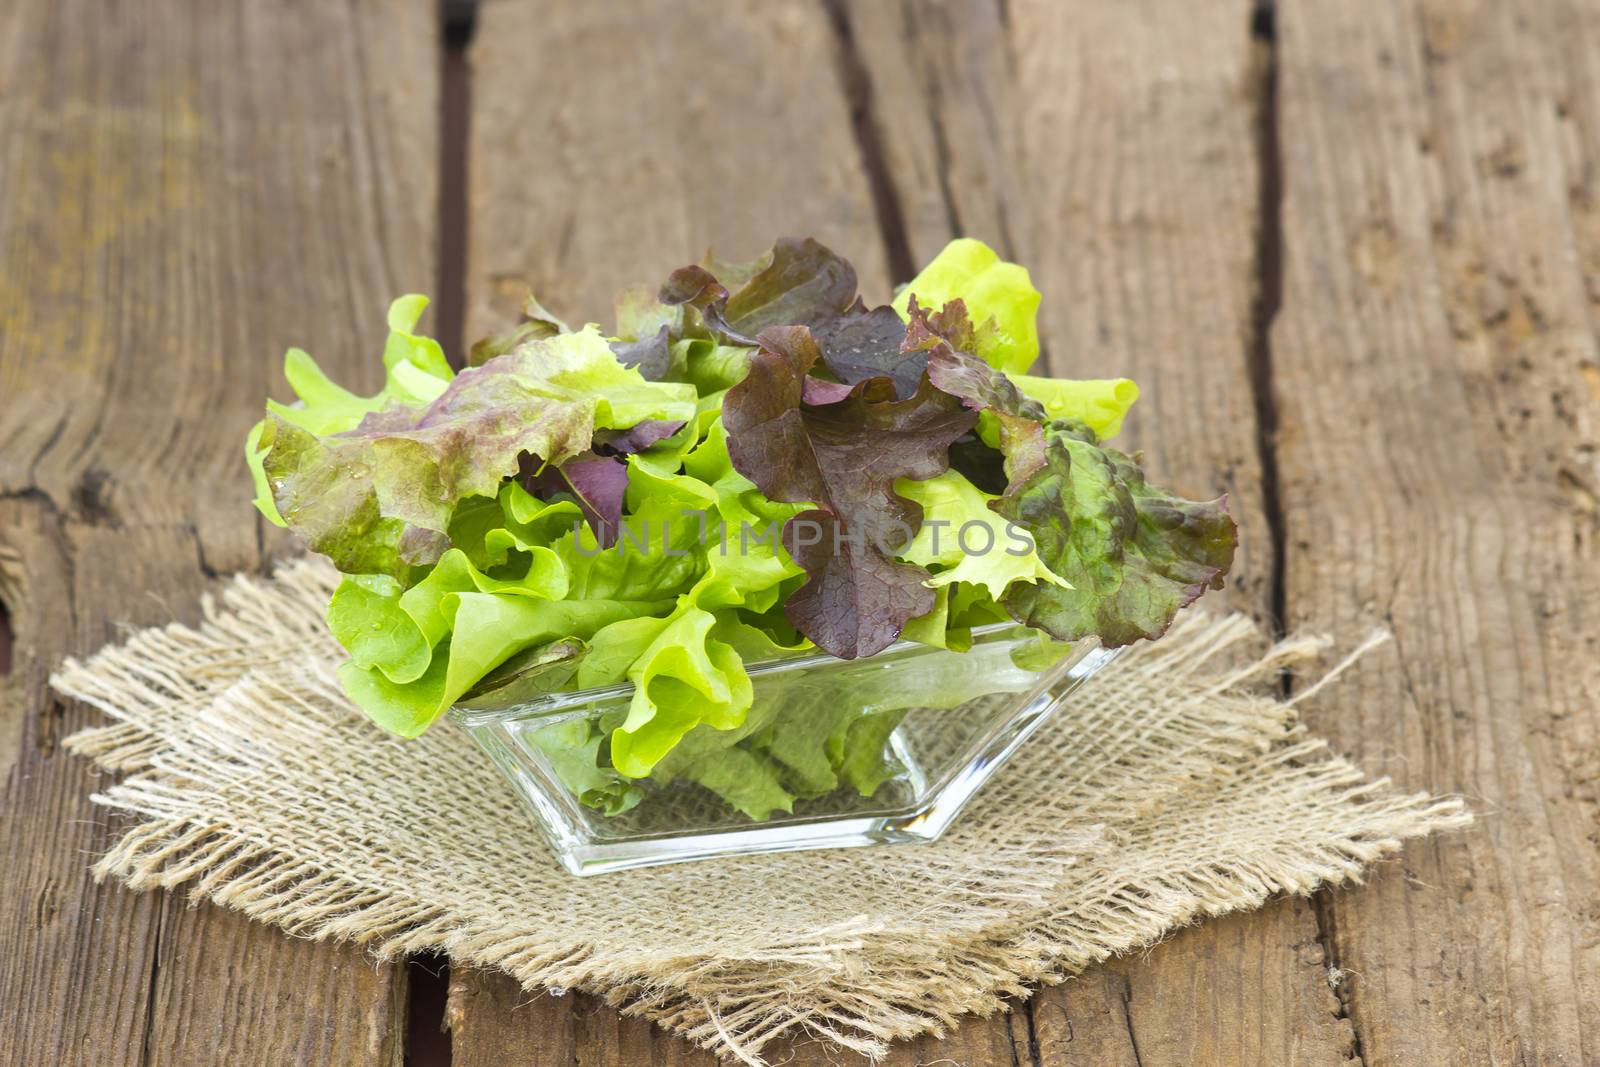 Mixed salad green leaves  by miradrozdowski